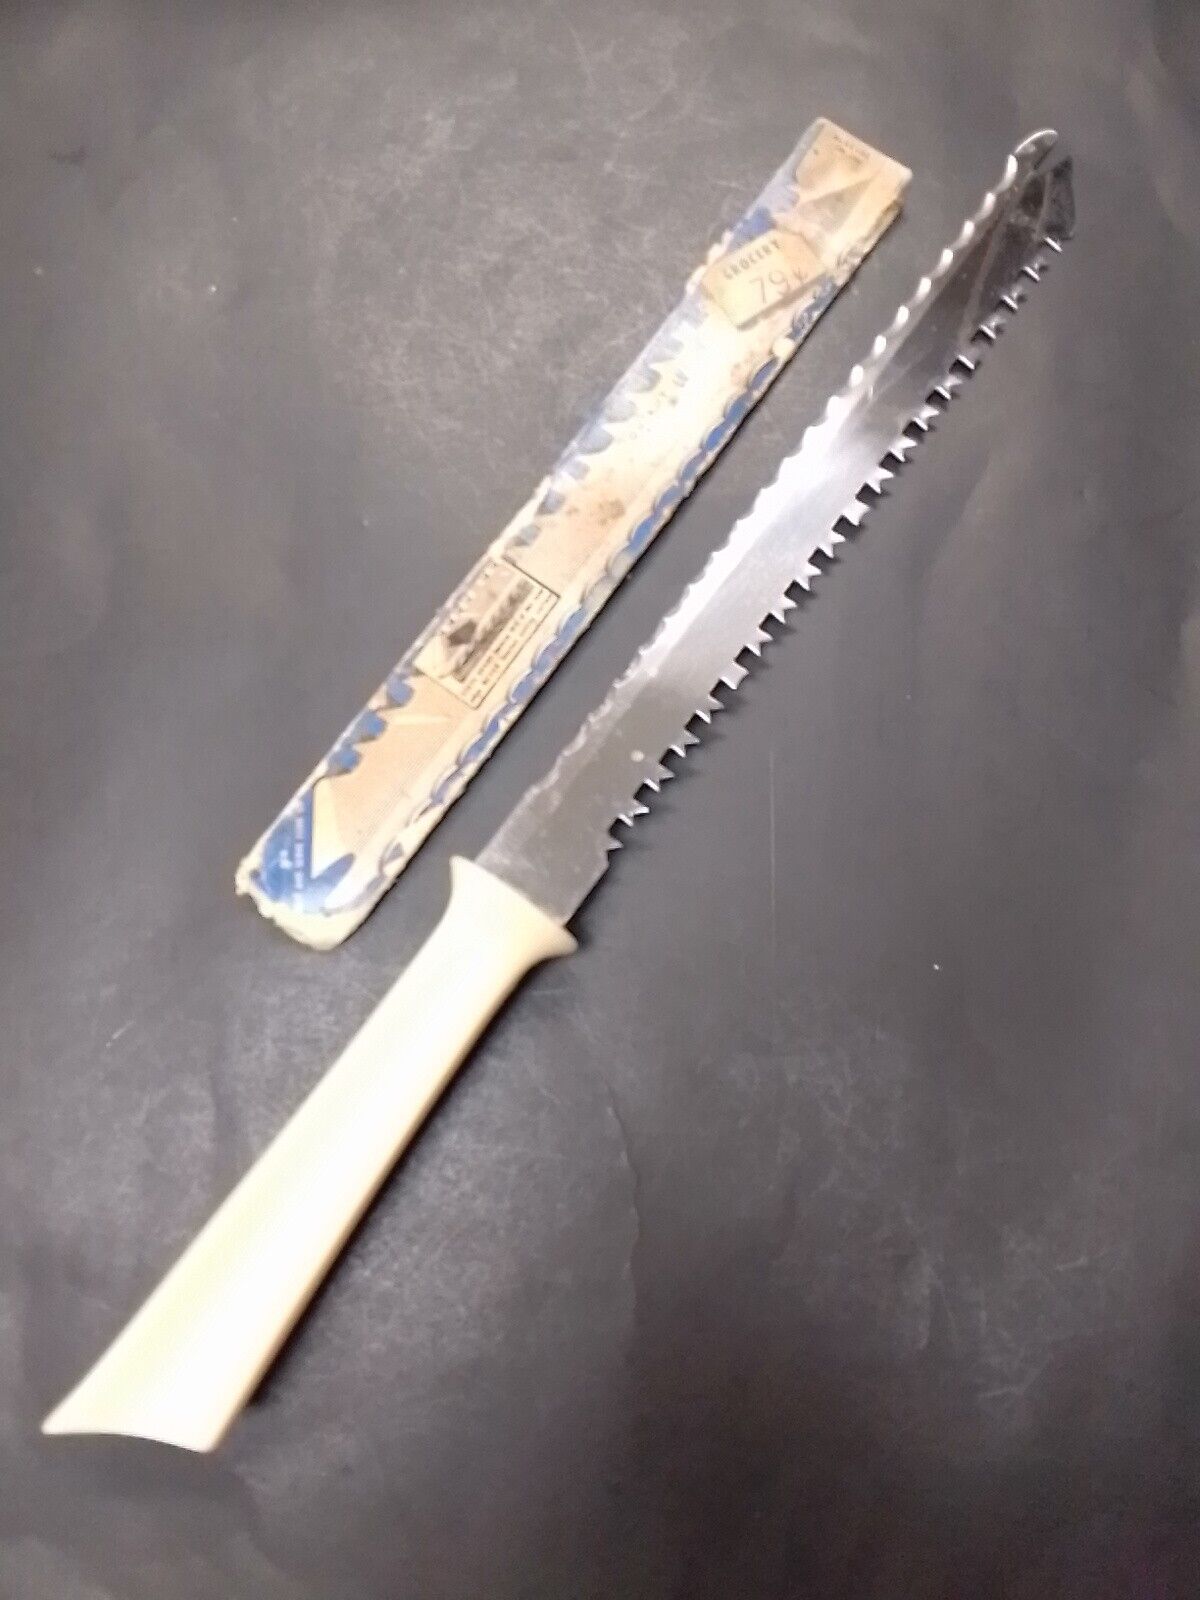 Quikut Stainless Knife Usa Vintage Serve And Serve Fork Tip Tempered